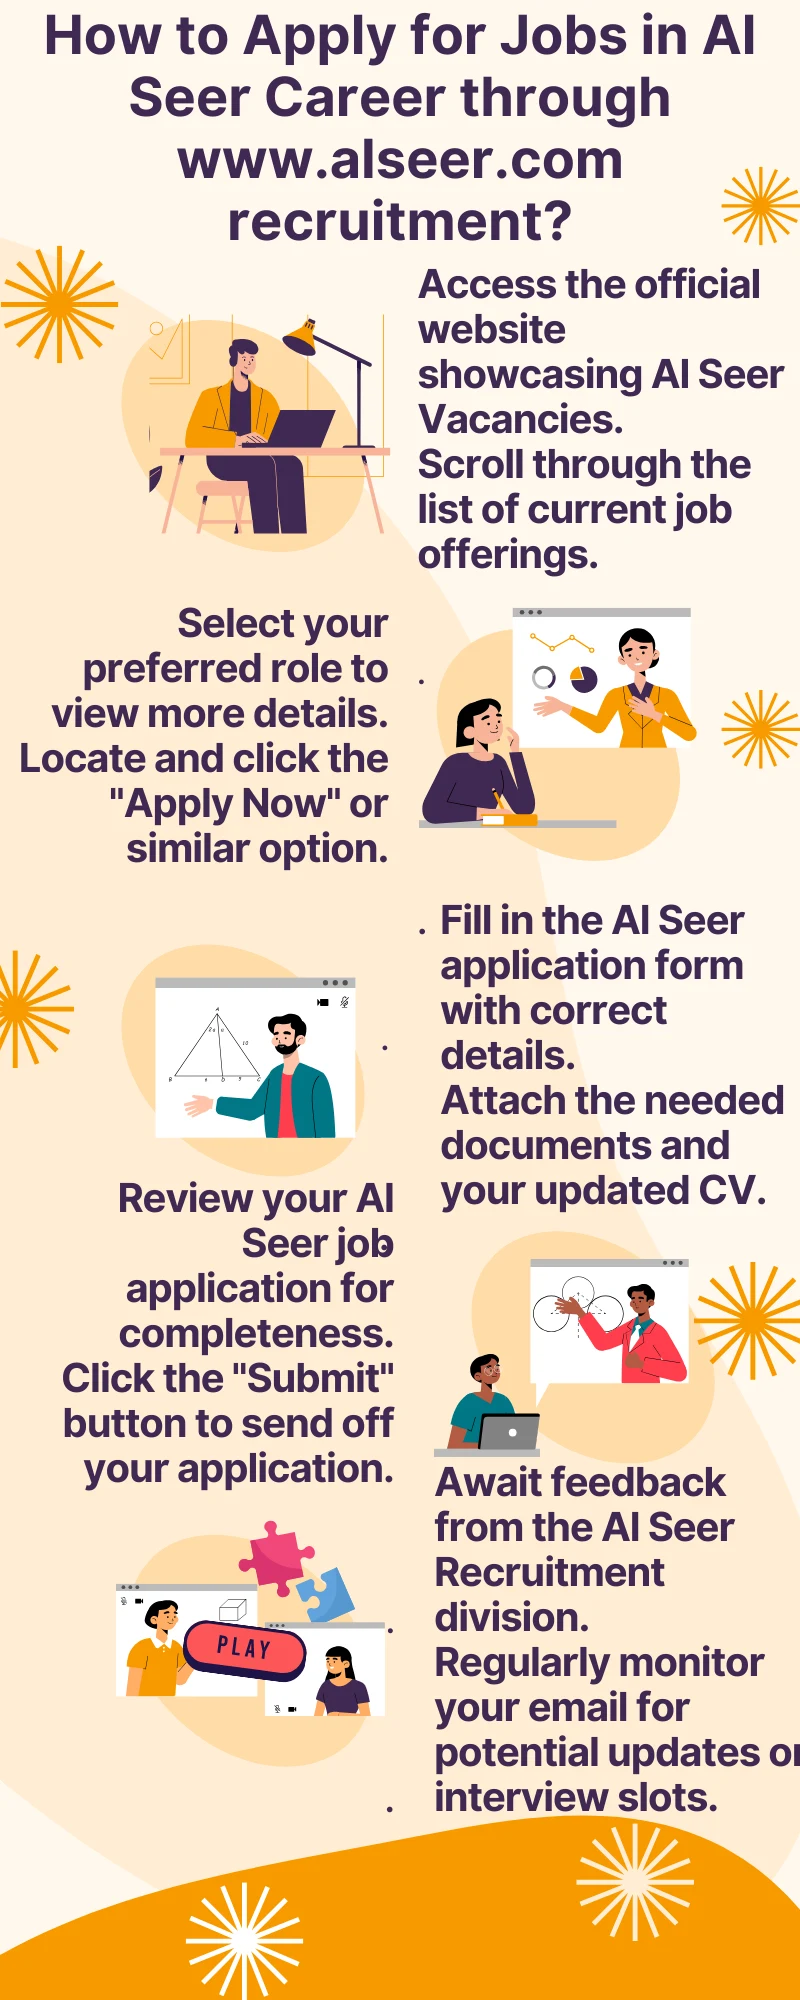 How to Apply for Jobs in Al Seer Career through www.alseer.com recruitment?